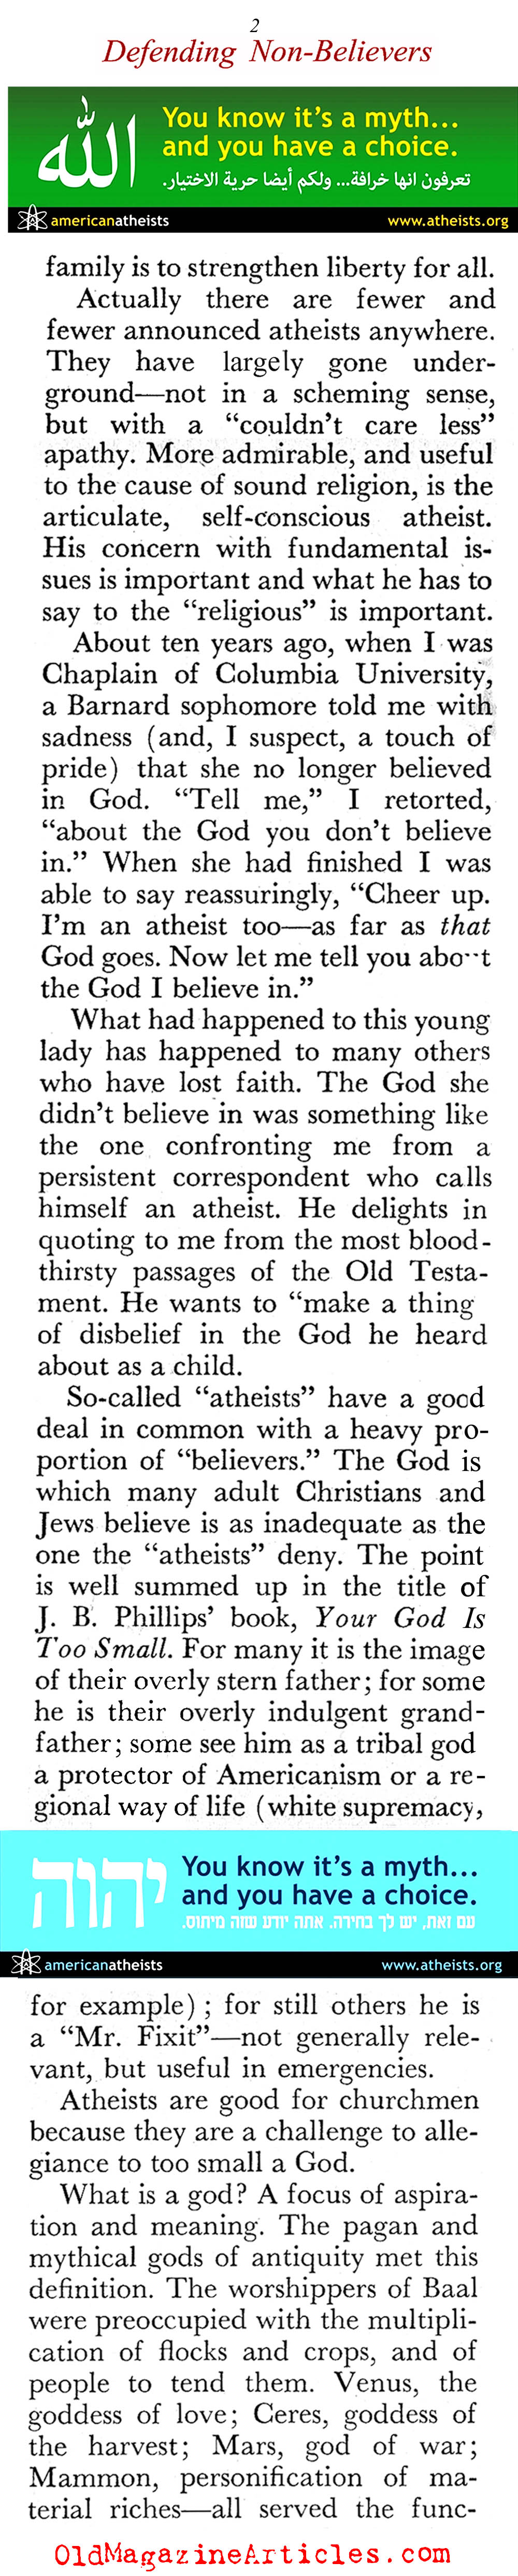 A Christian Defends Atheists (Coronet Magazine, 1961)